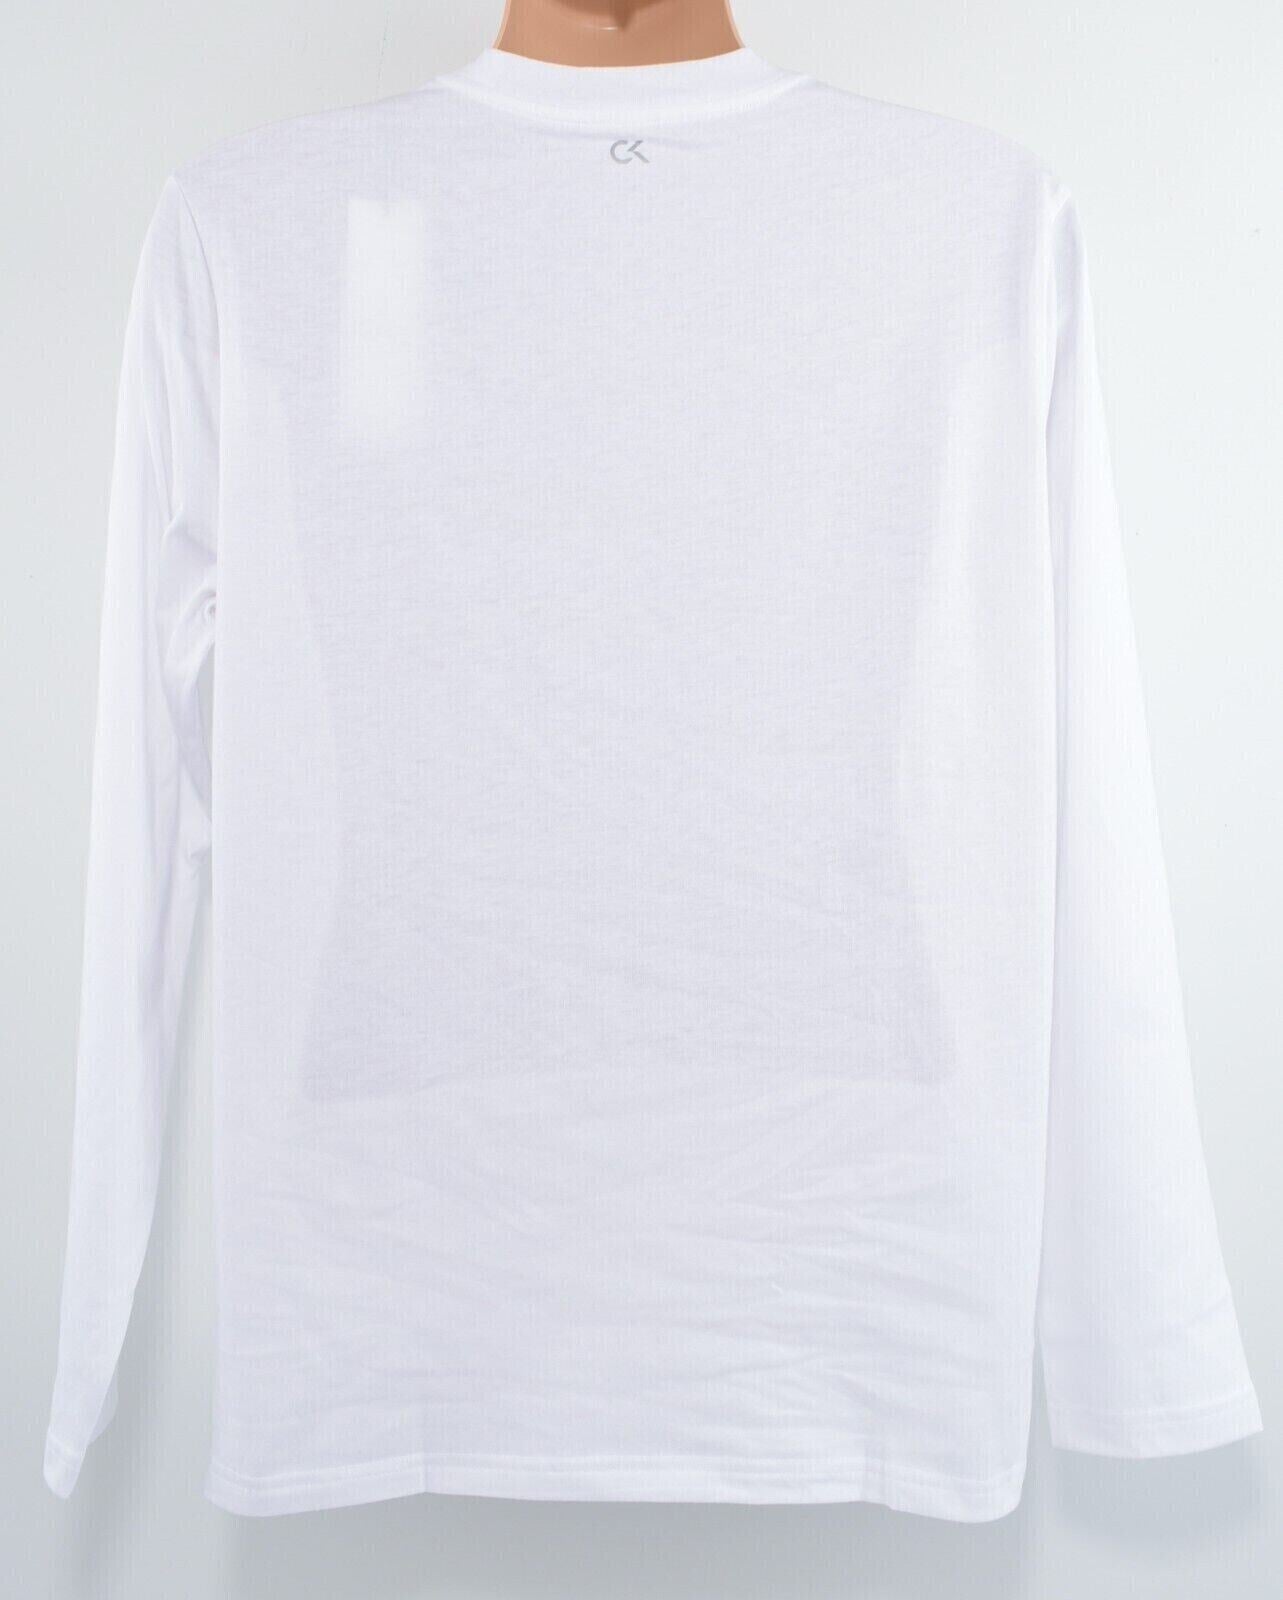 CALVIN KLEIN Performance Men's Long Sleeve T-shirt Top, Bright White, size L